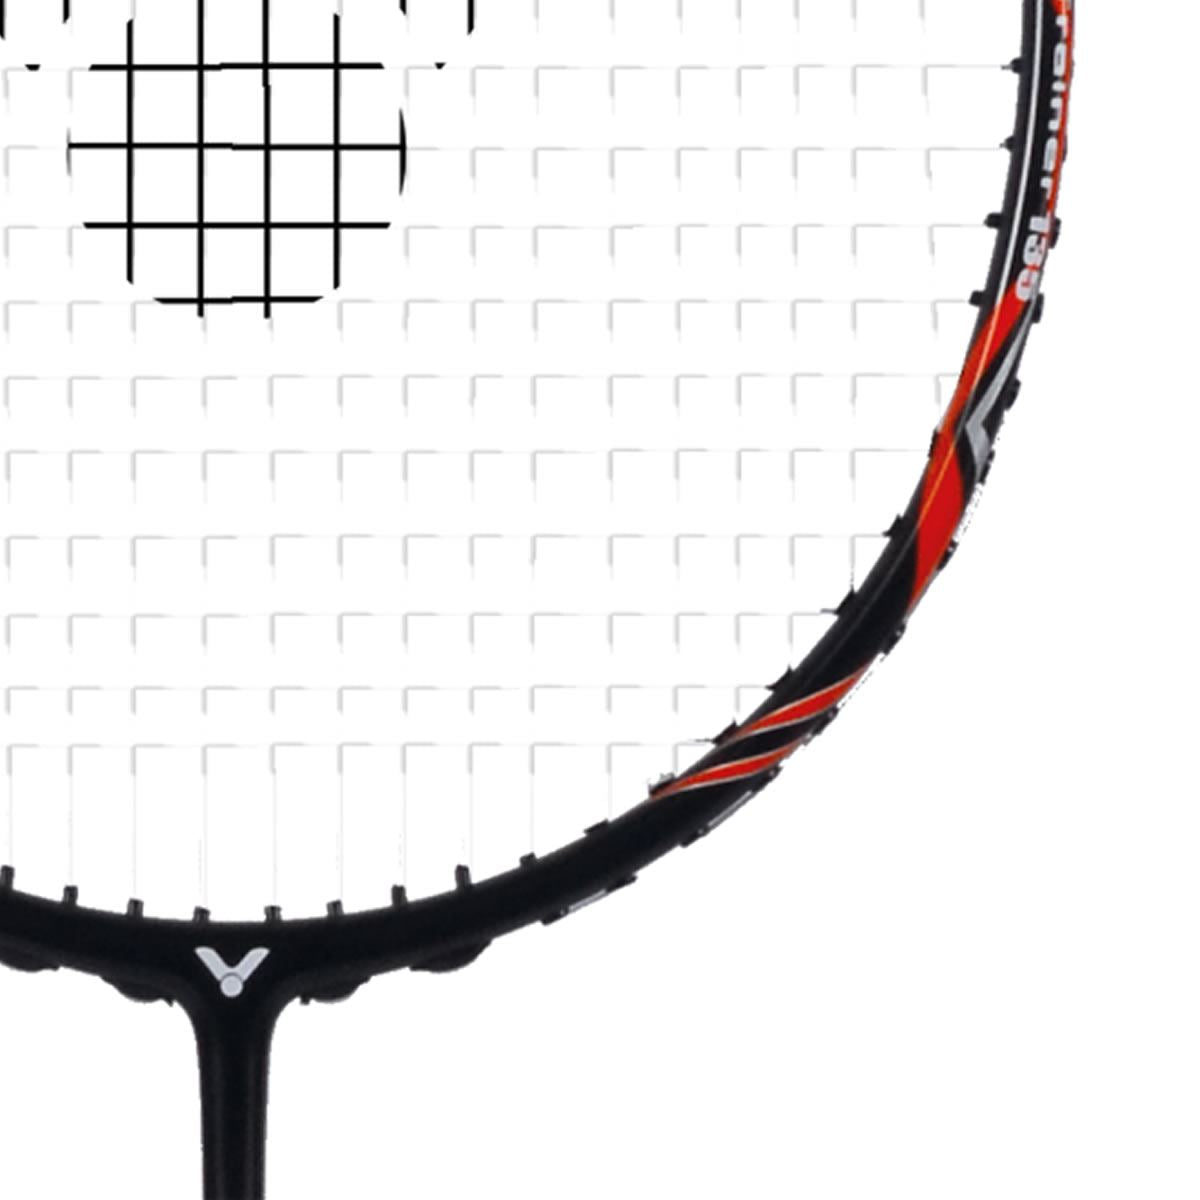 Victor Trainer 135 Badminton Racket - Black Red